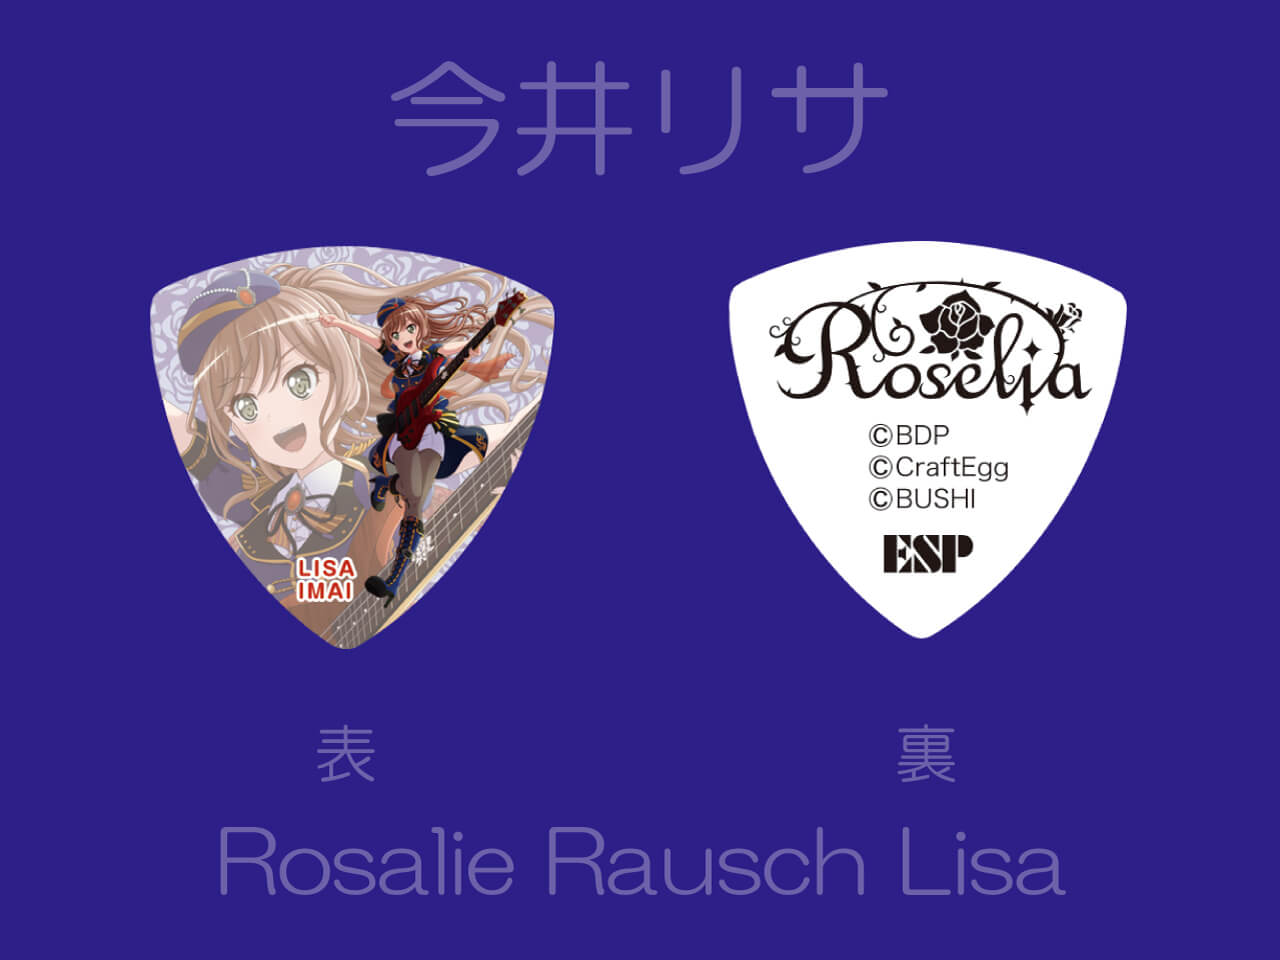 【ESP×BanG Dream!コラボピック】Roselia×RAISE A SUILEN合同ライブ「Rausch und/and Craziness」記念ピック "今井リサ"（Rosalie Rausch Lisa）＆”ハメパチ” セット